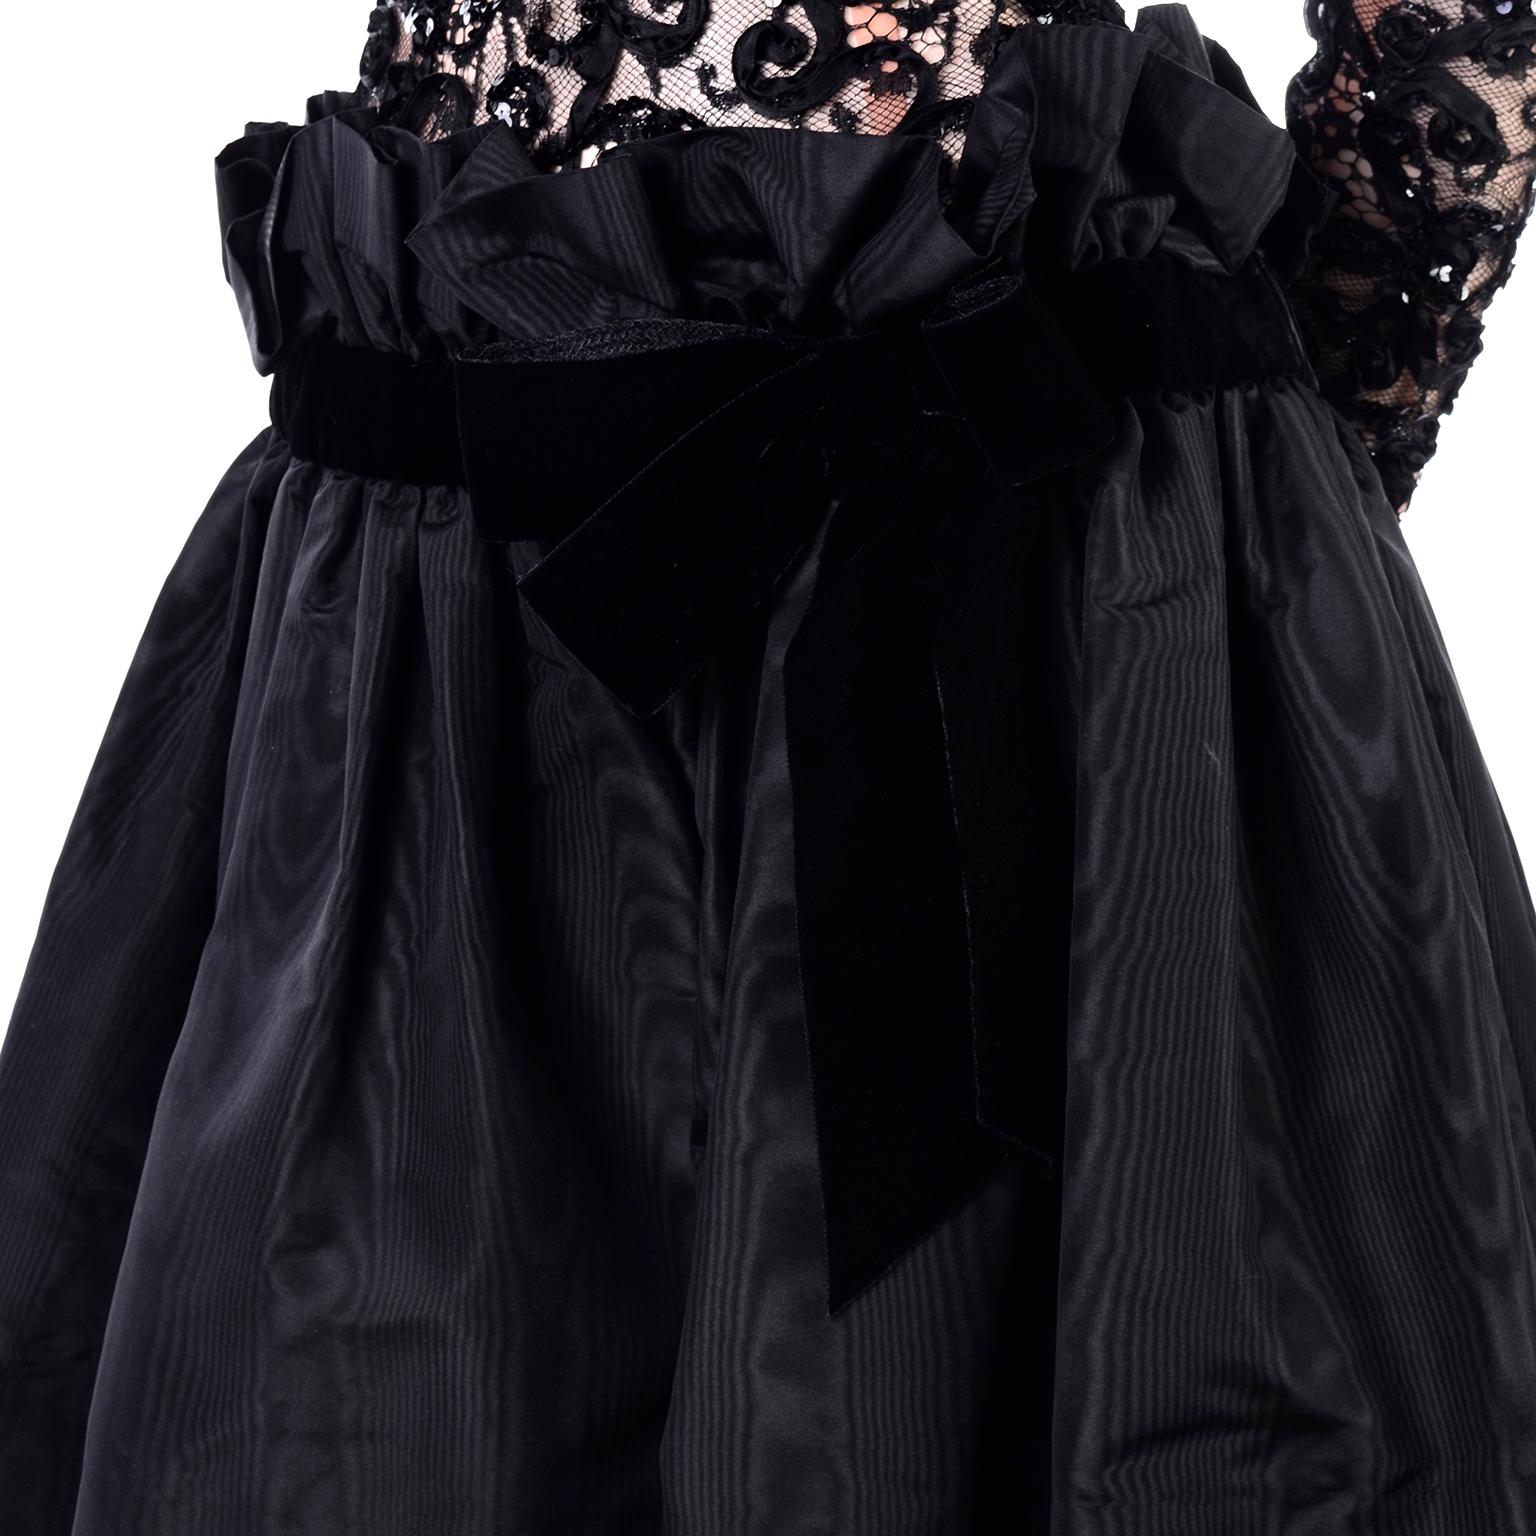 1980s Vintage Bob Mackie Black Lace Illusion Dress w Paper Bag Waist 1